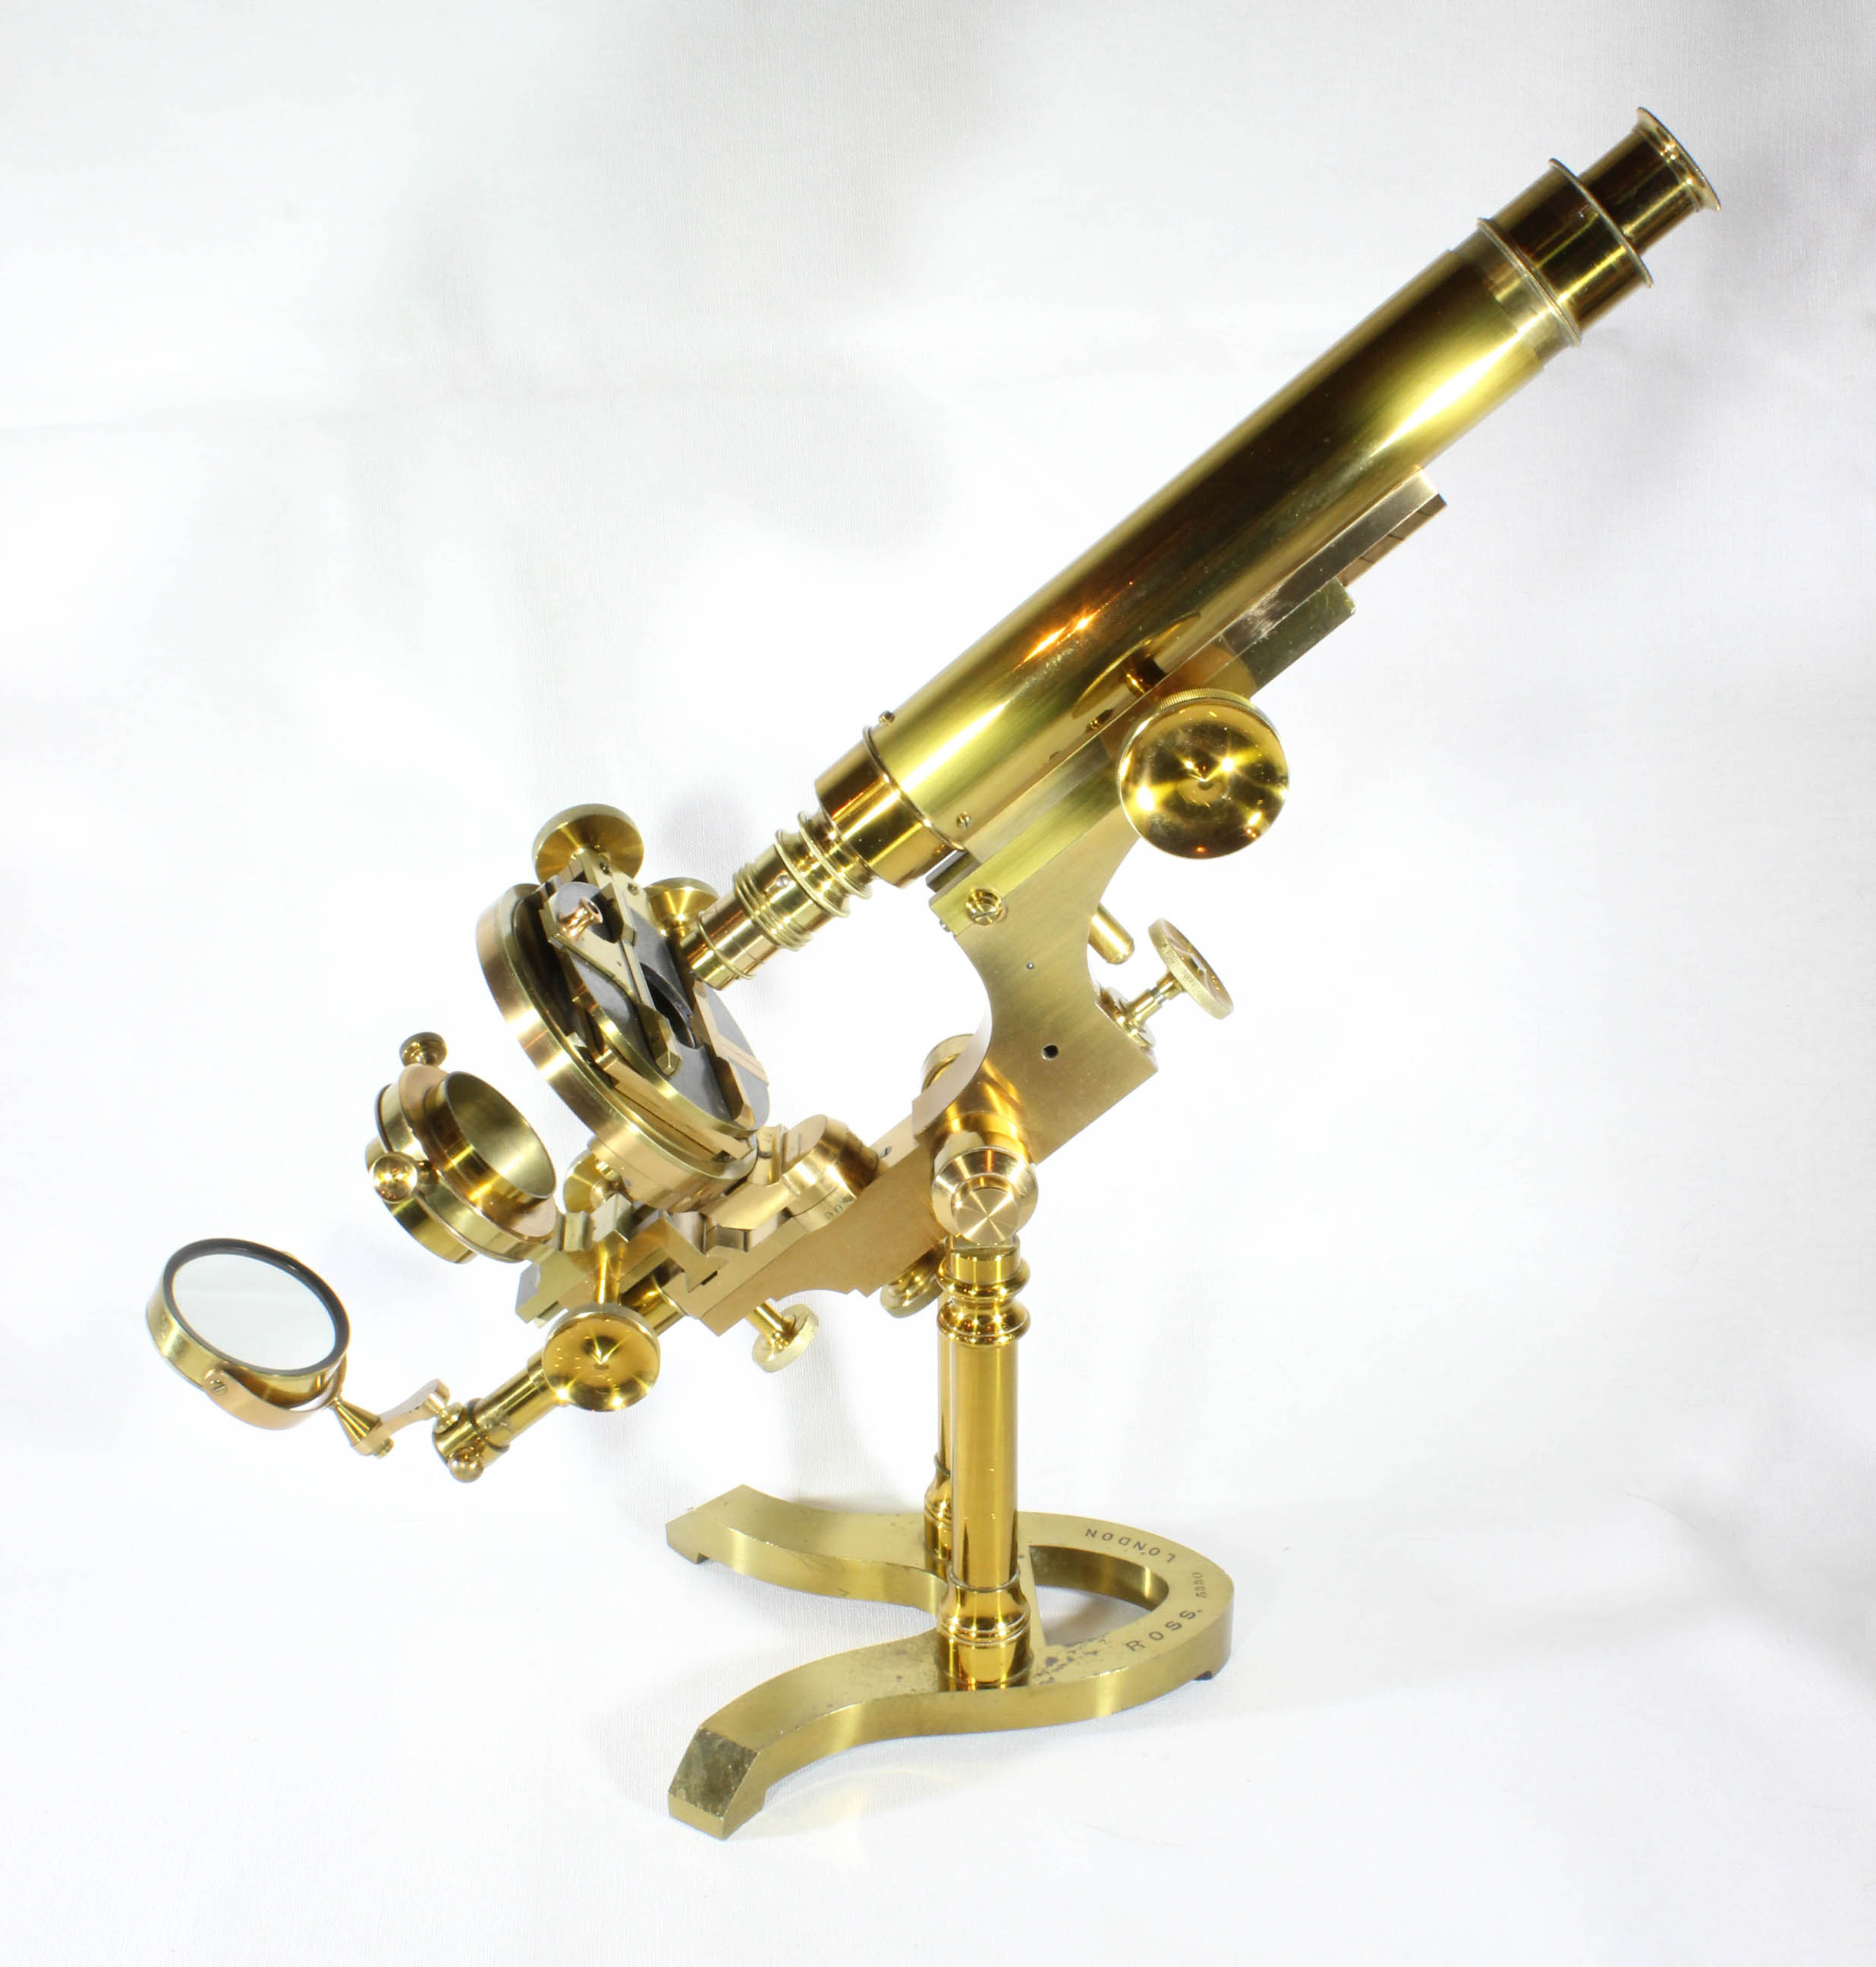 The Ross Zentmayer microscope